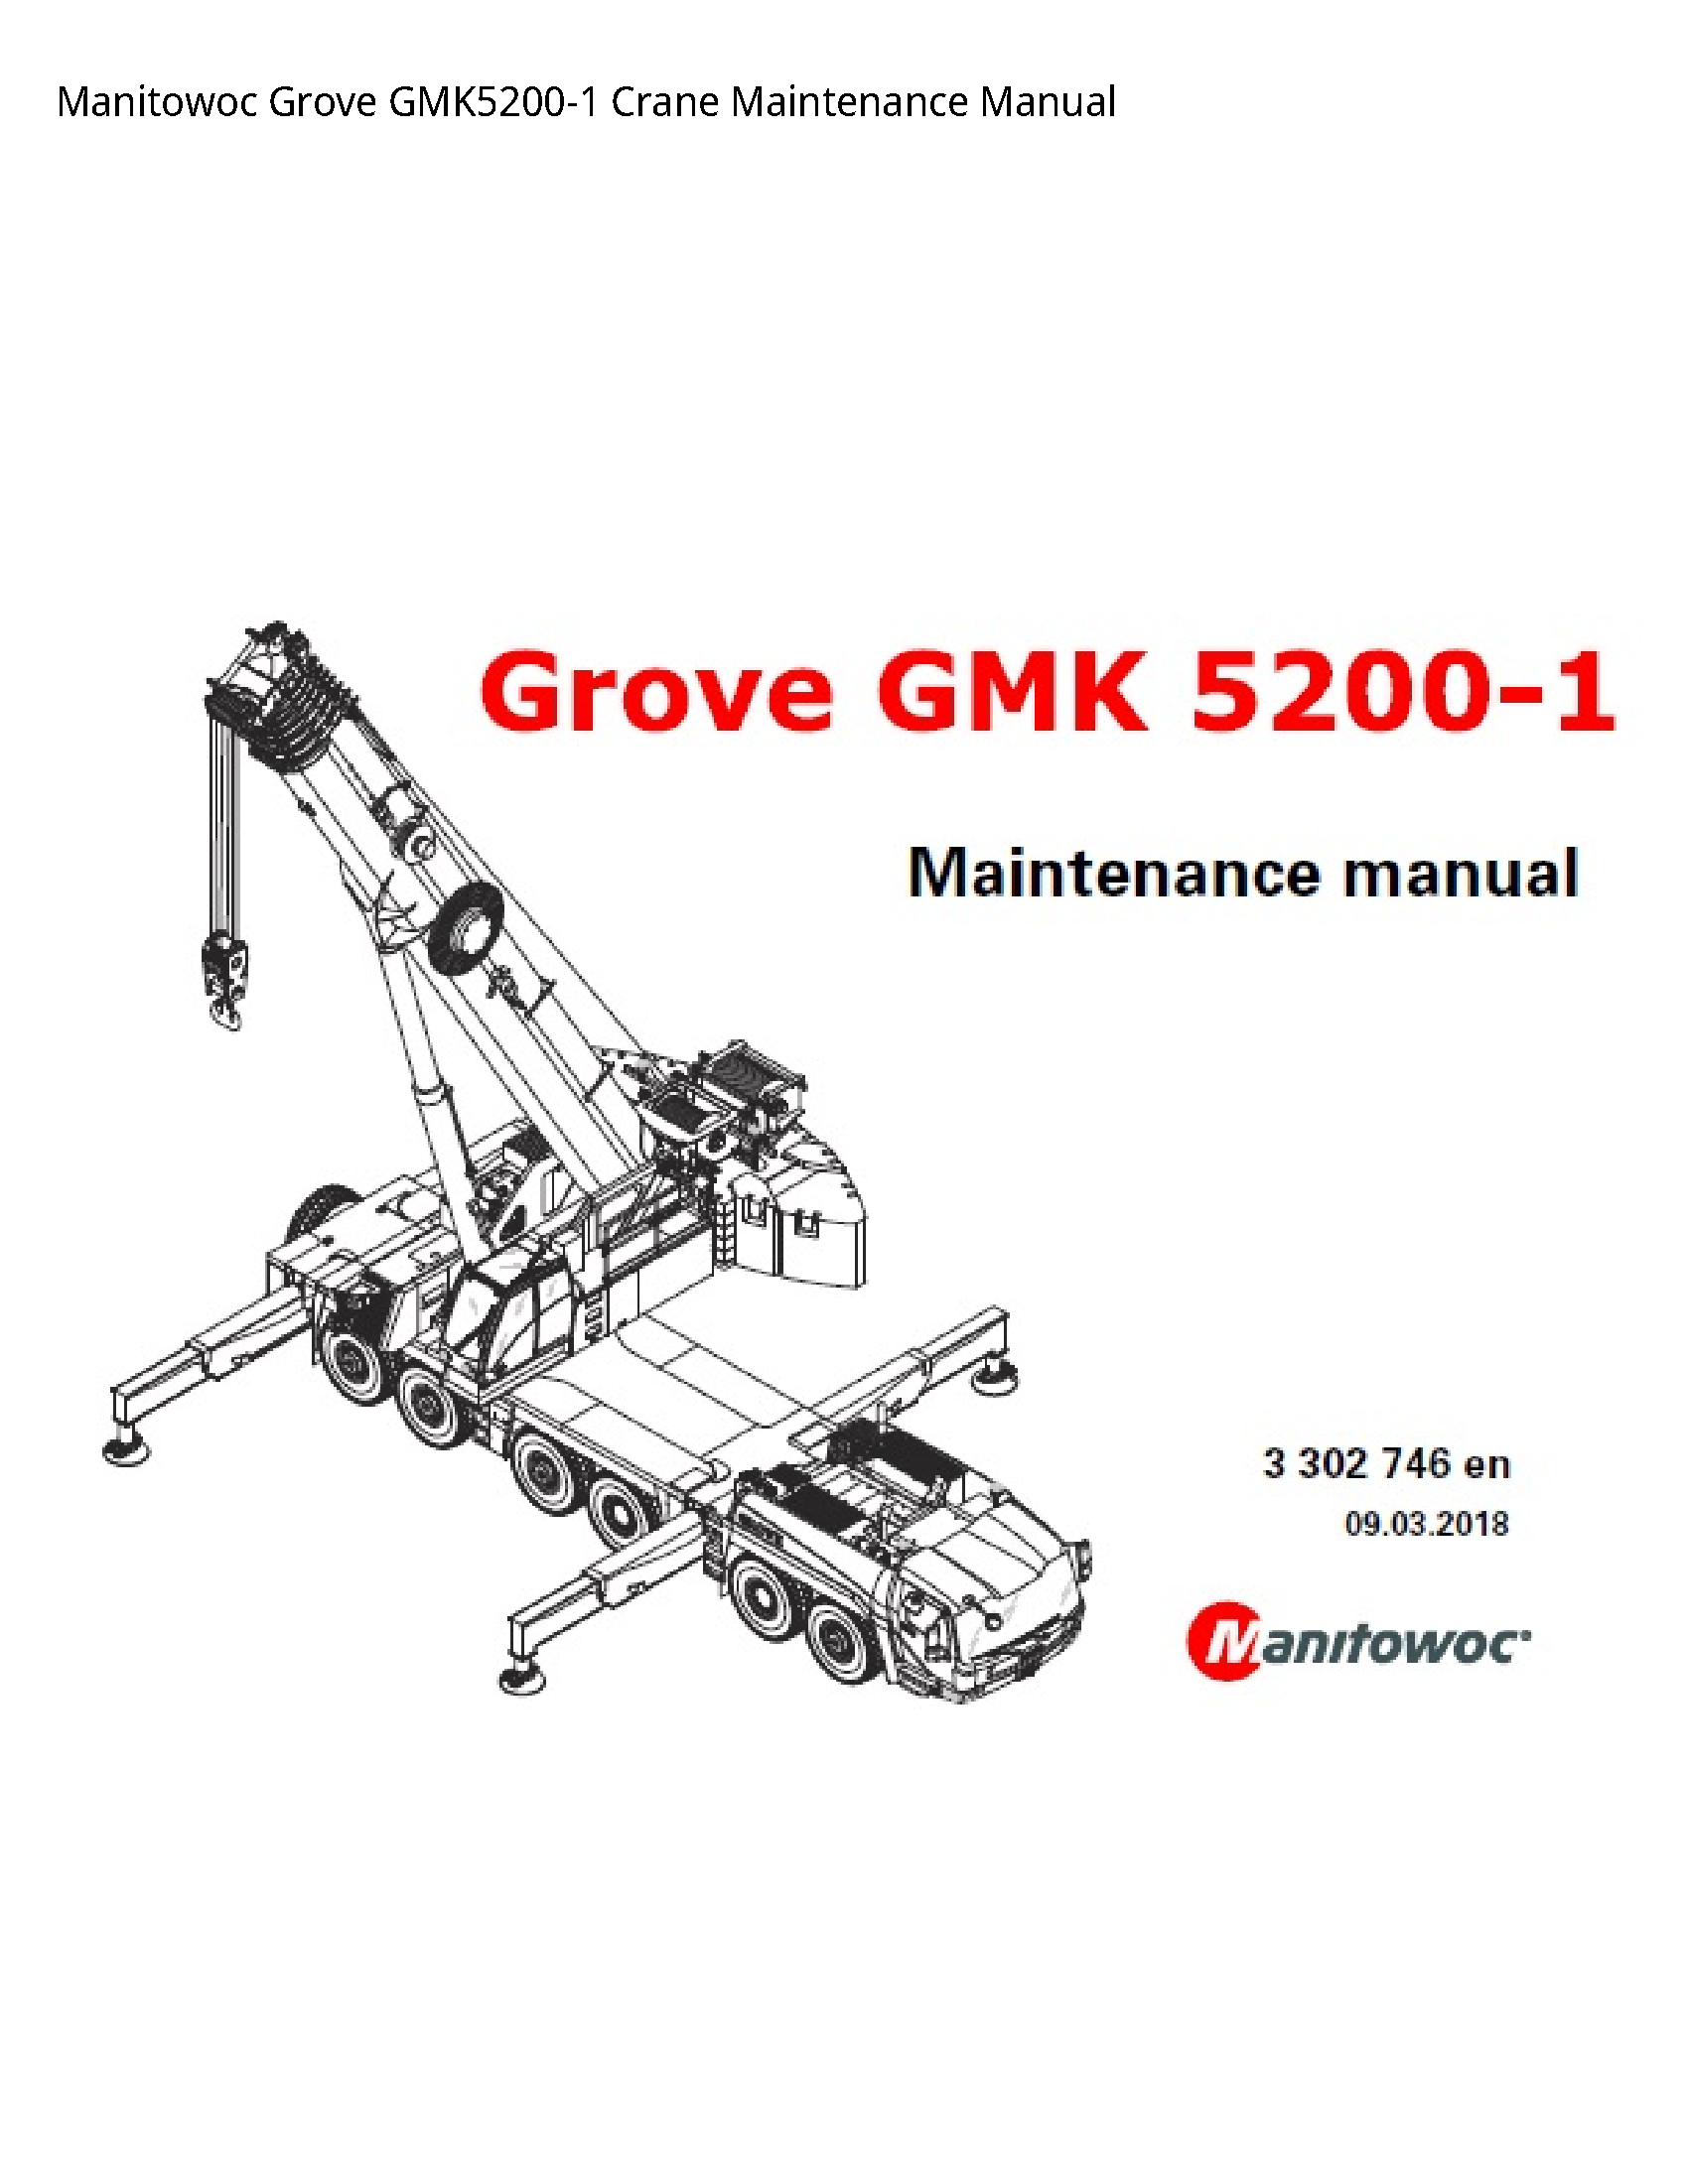 Manitowoc GMK5200-1 Grove Crane Maintenance manual